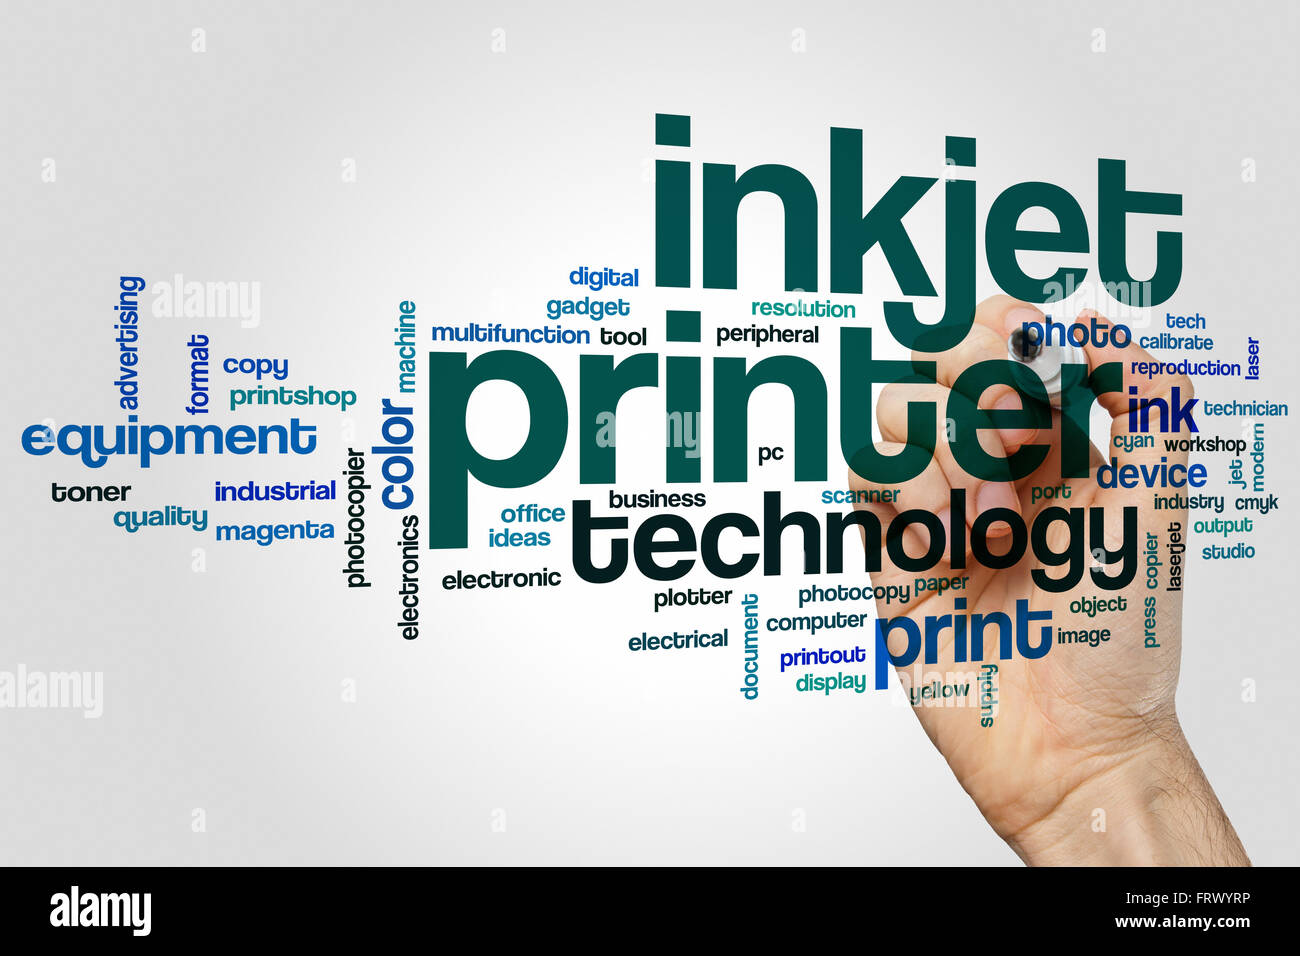 Inkjet printer word cloud concept Stock Photo